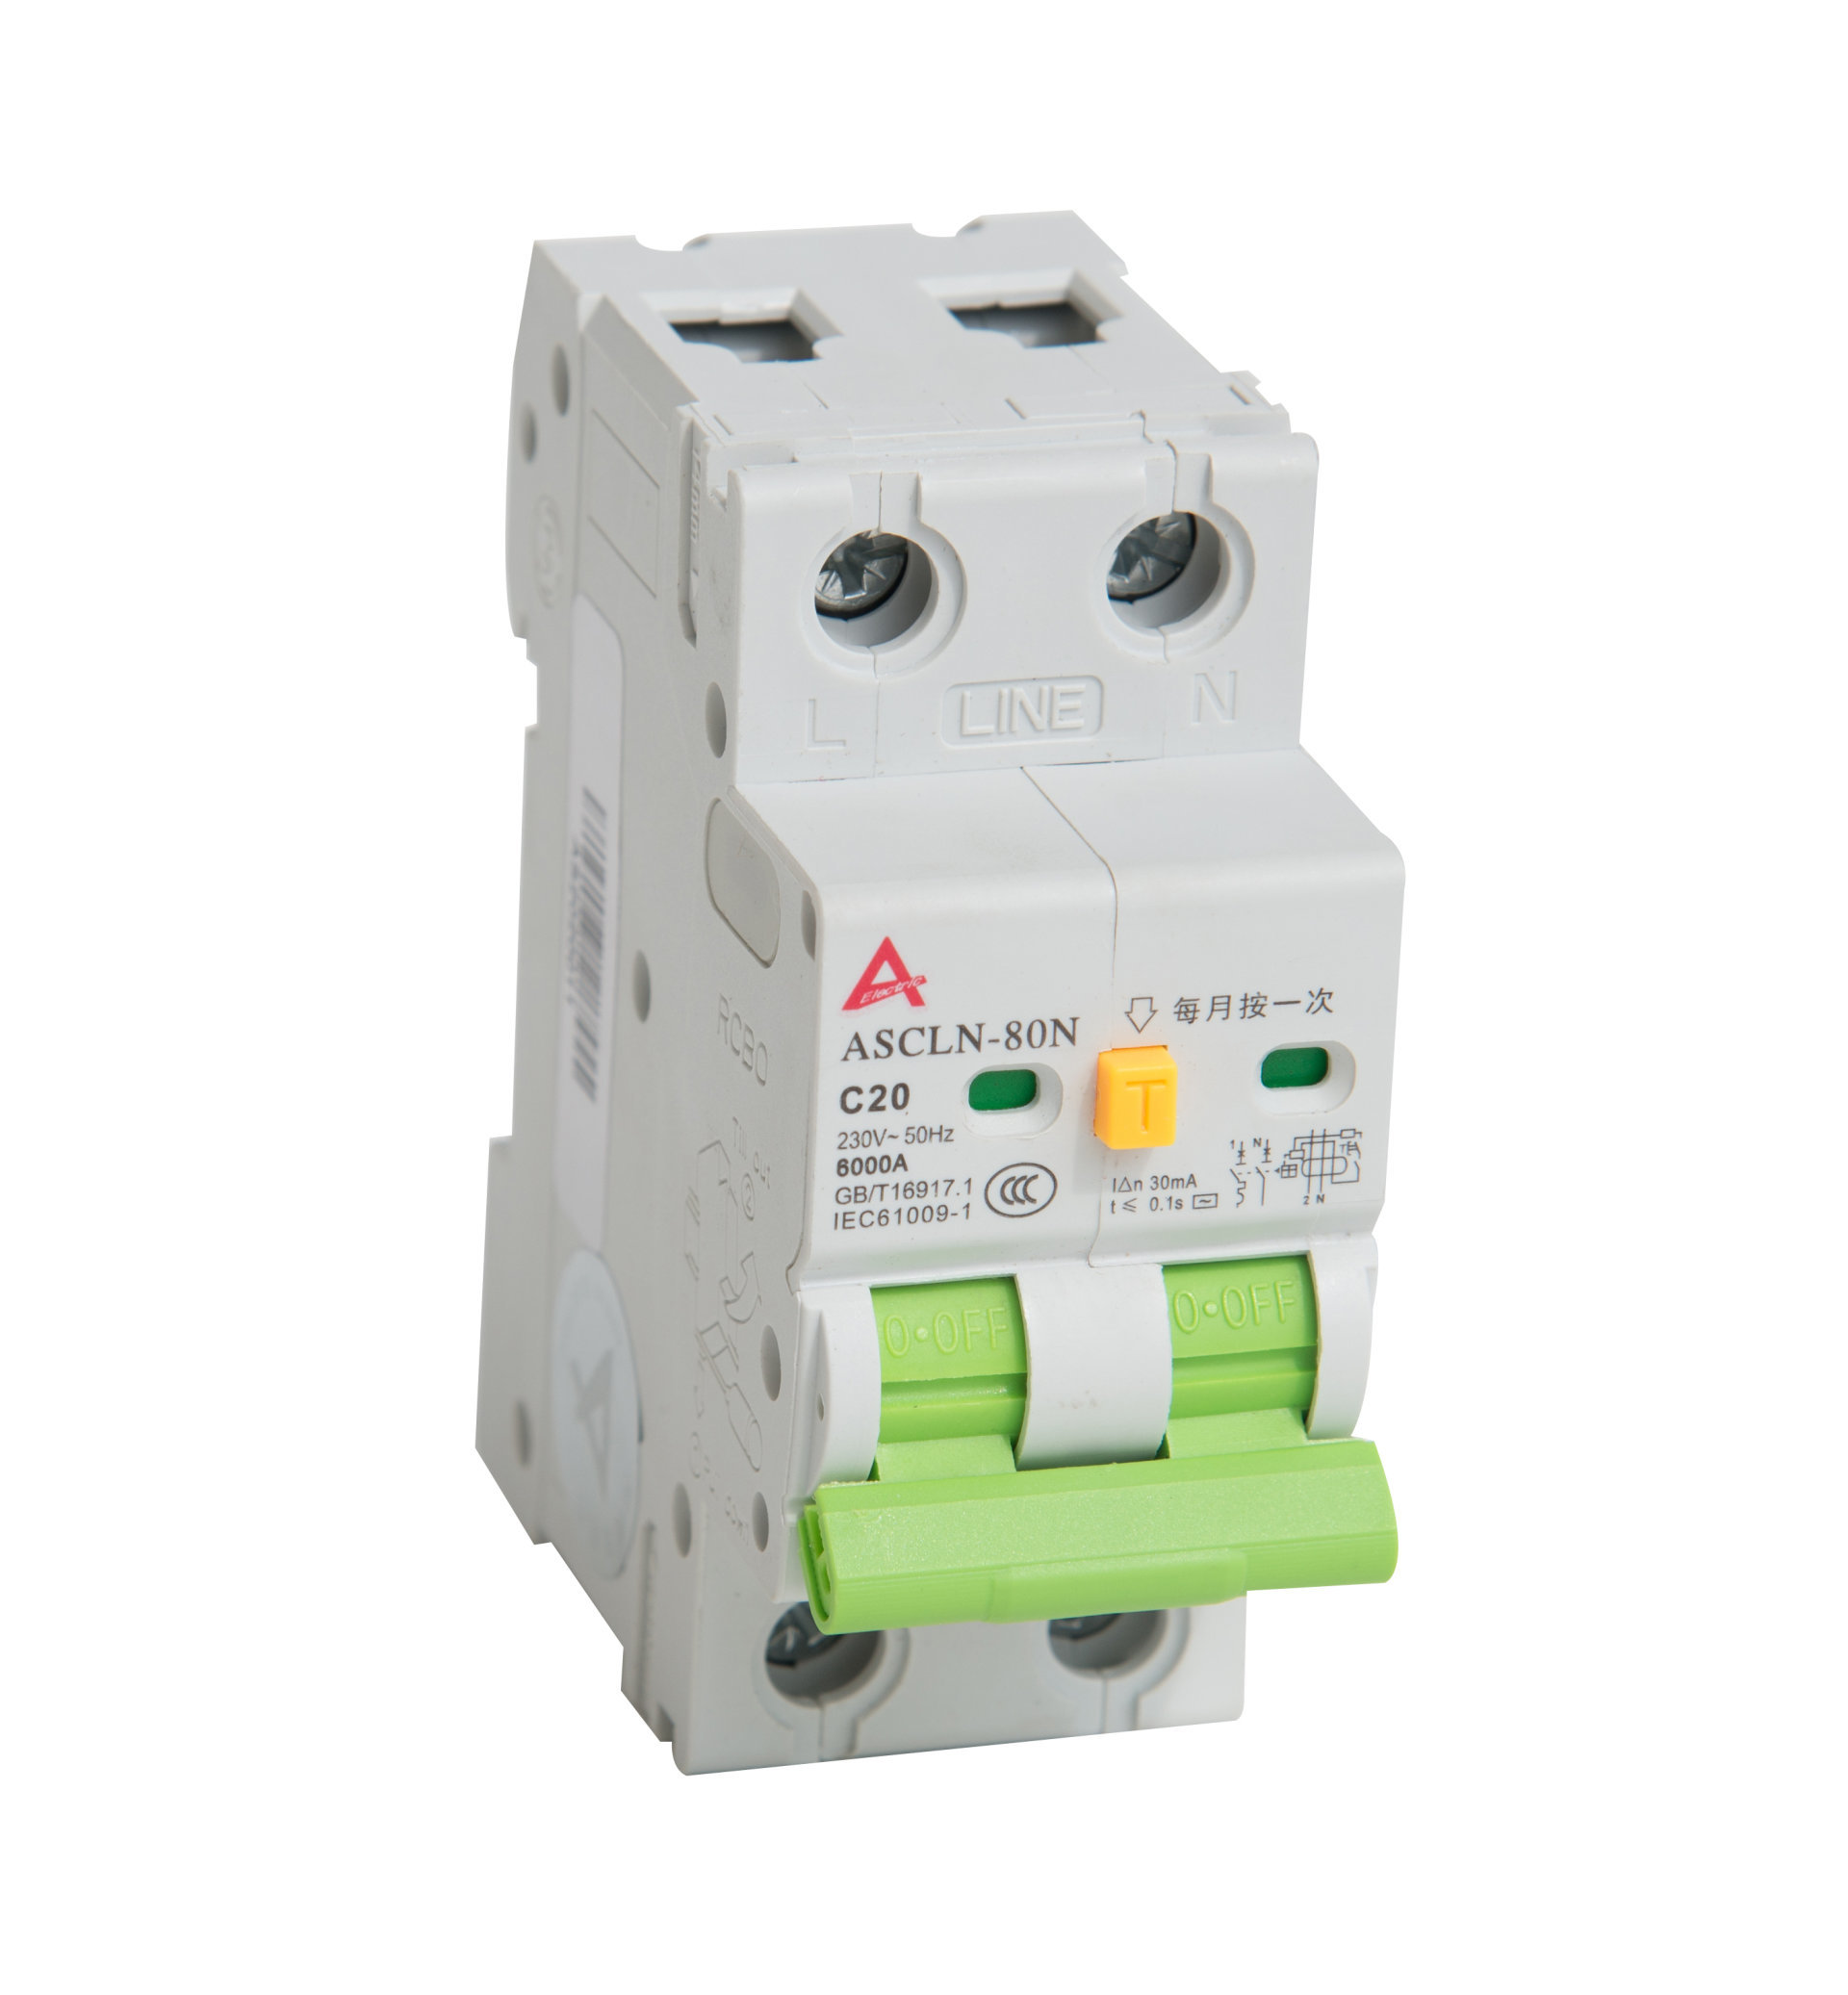 ASCL series miniature leakage protection circuit breaker